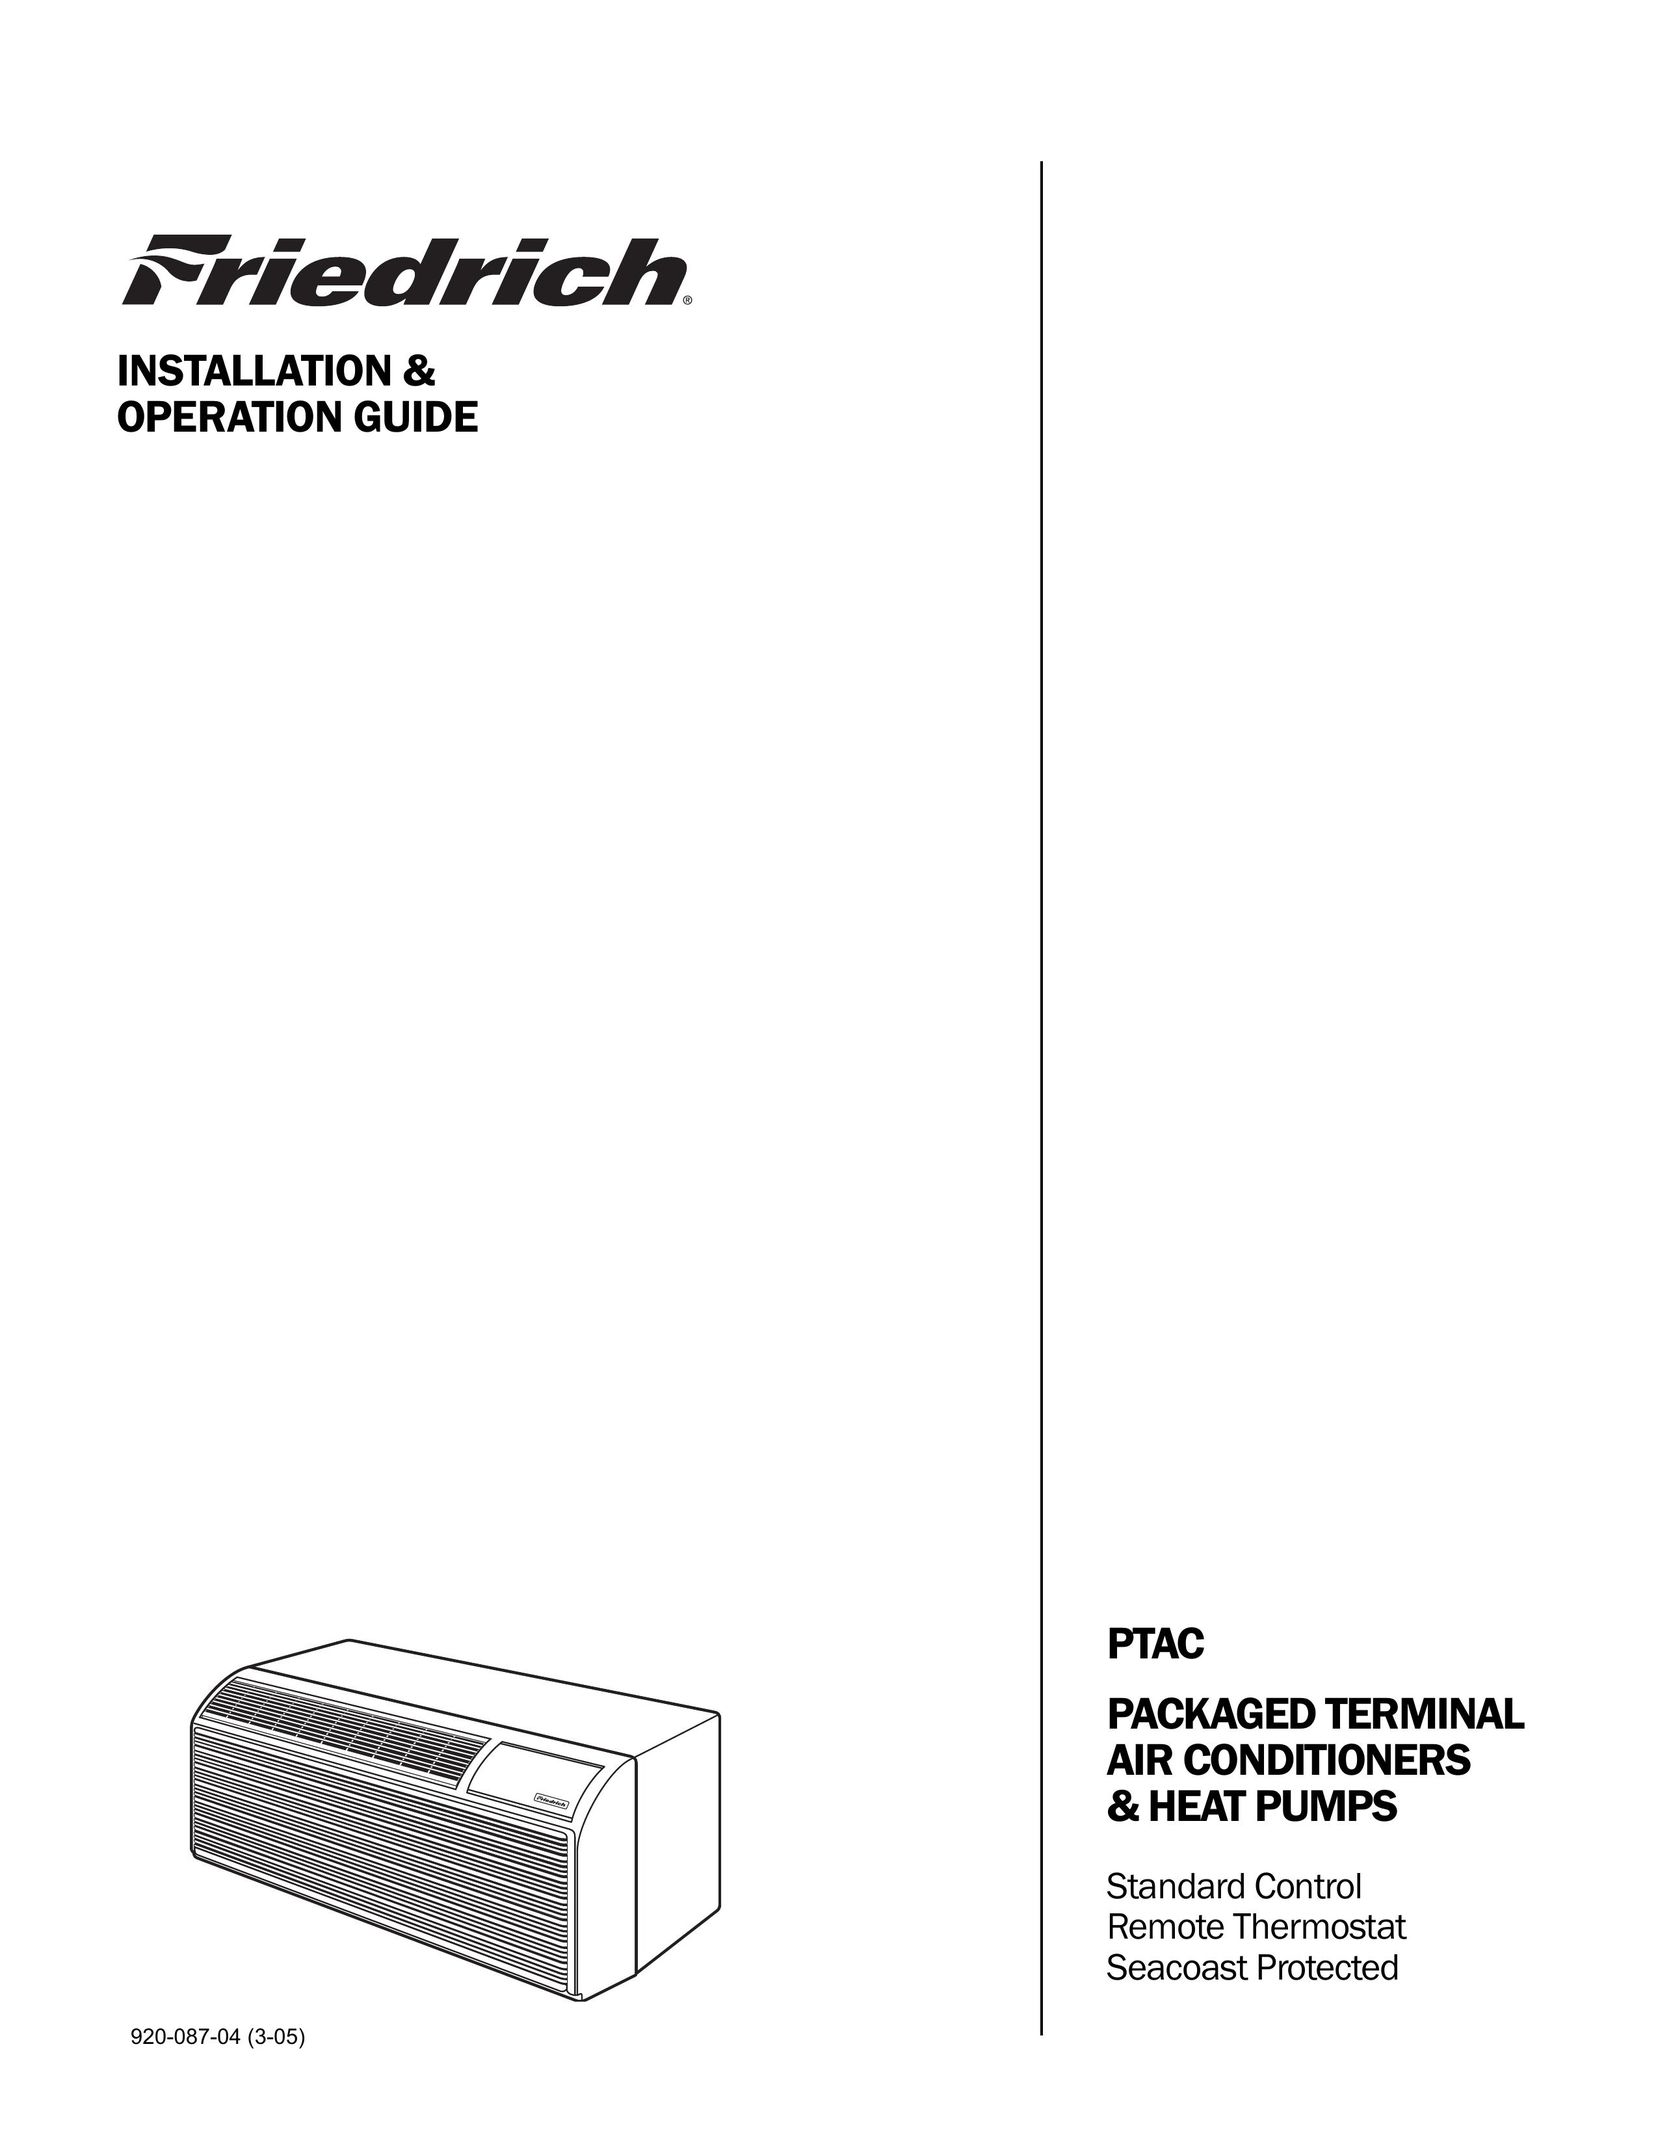 Friedrich 920-087-04 (3-05) Air Conditioner User Manual